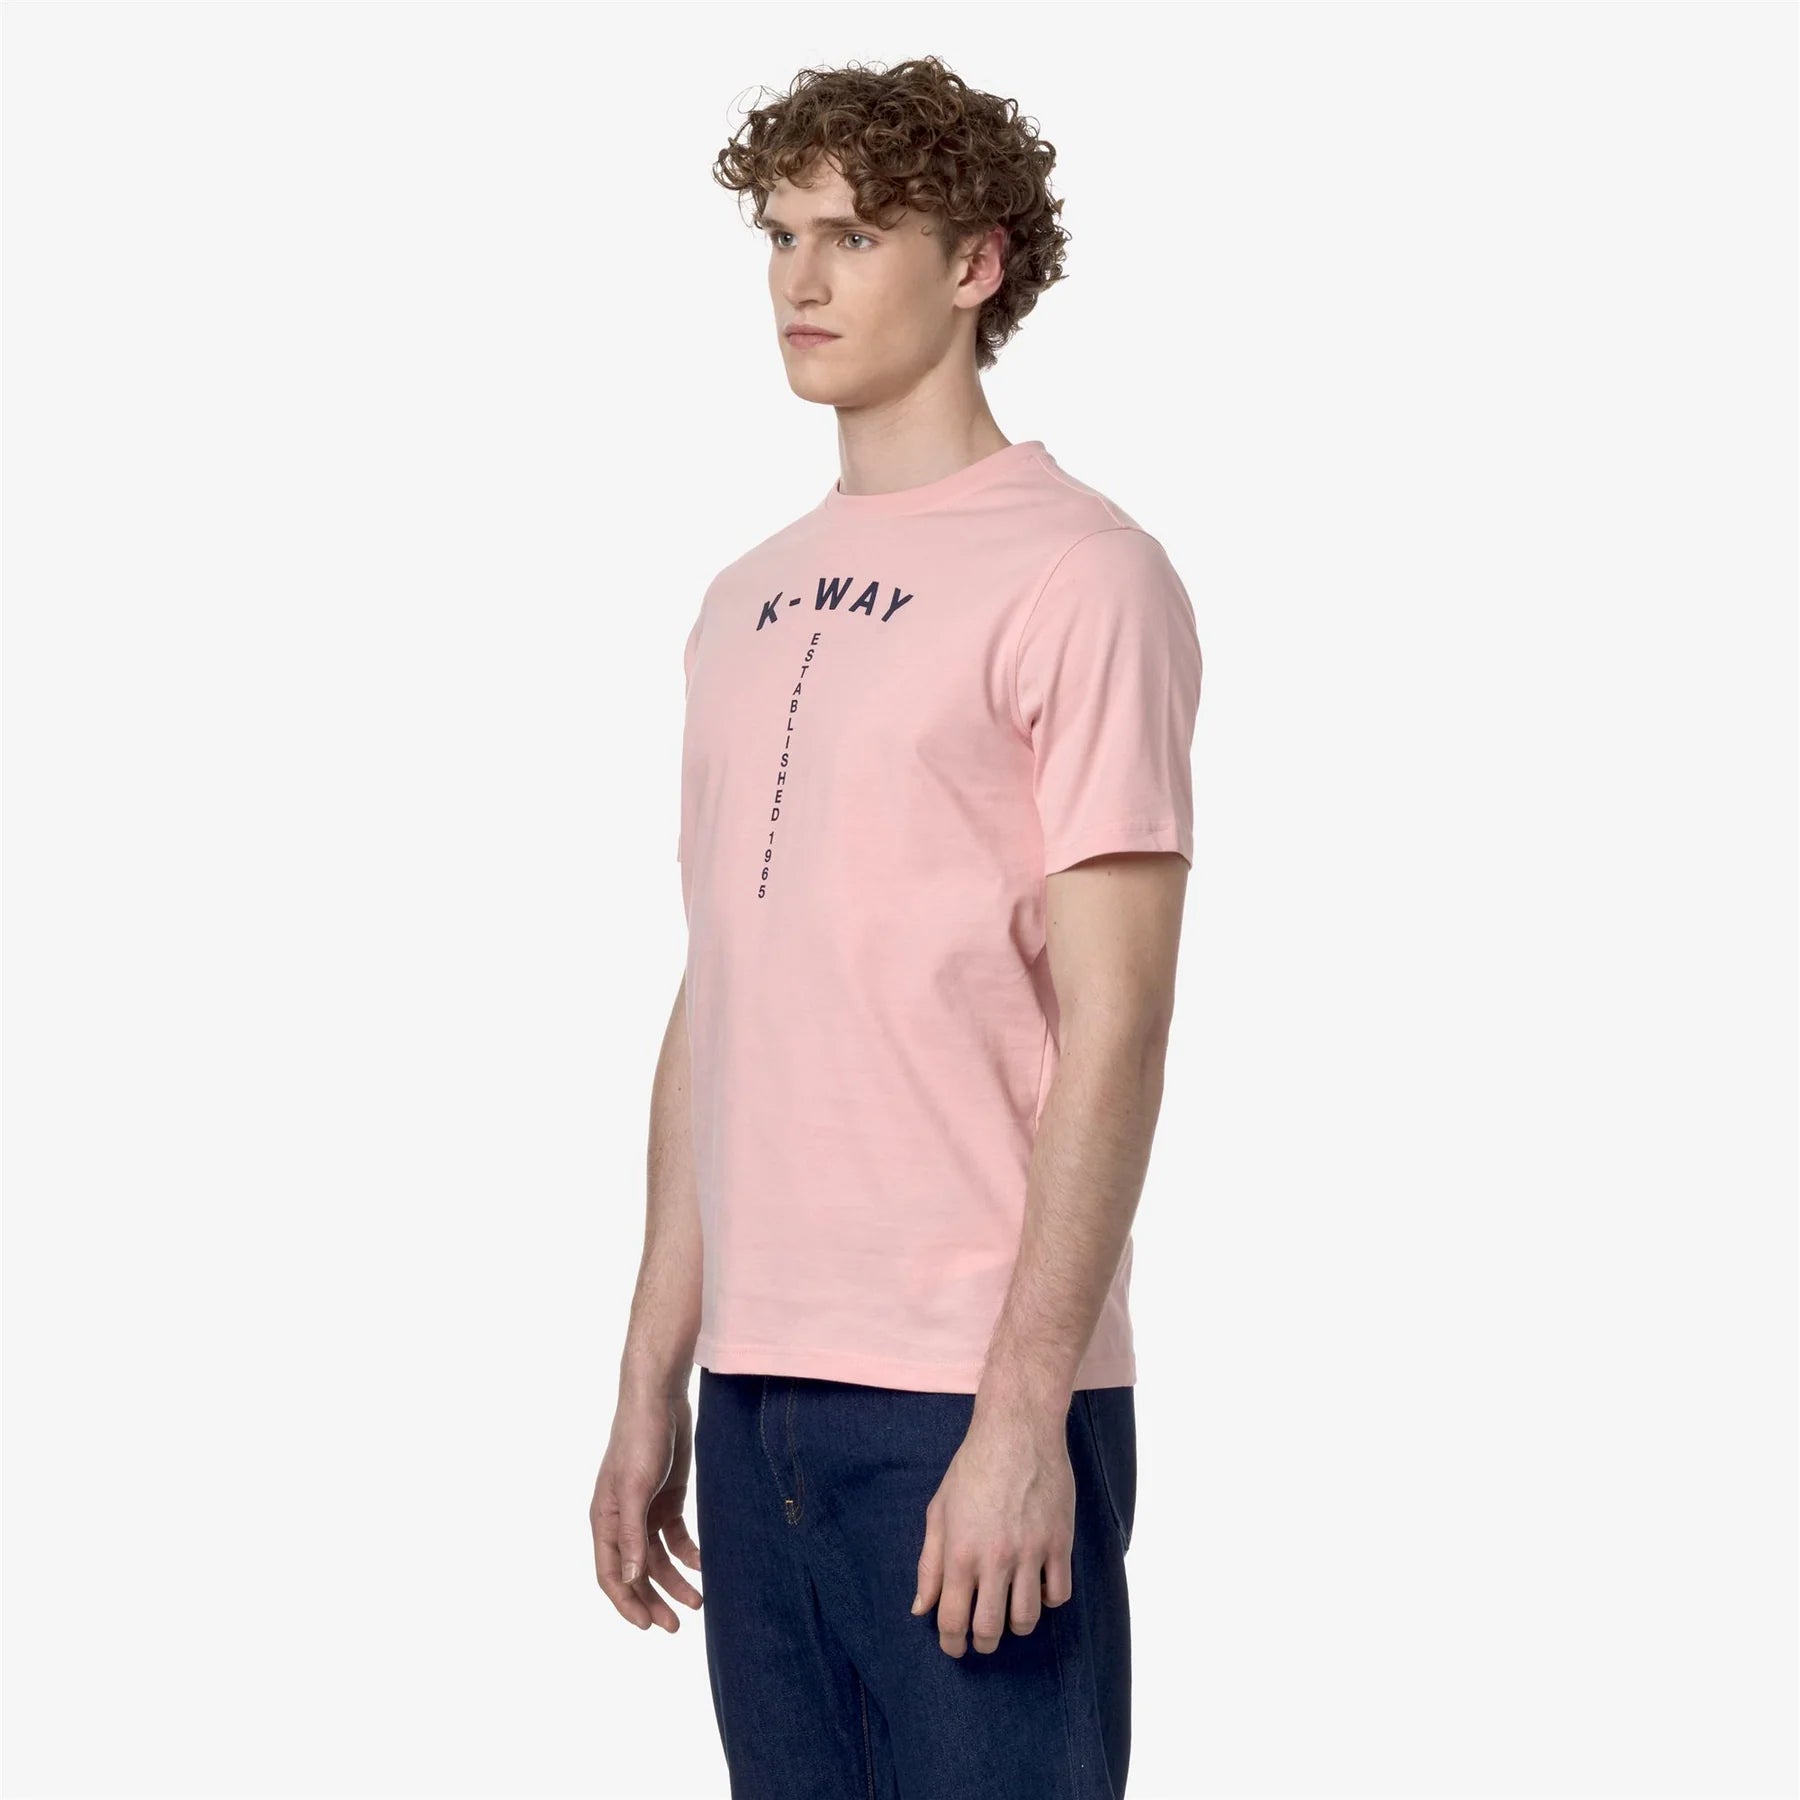 Camiseta K-WAY Odom Typo Est. Pink Ash